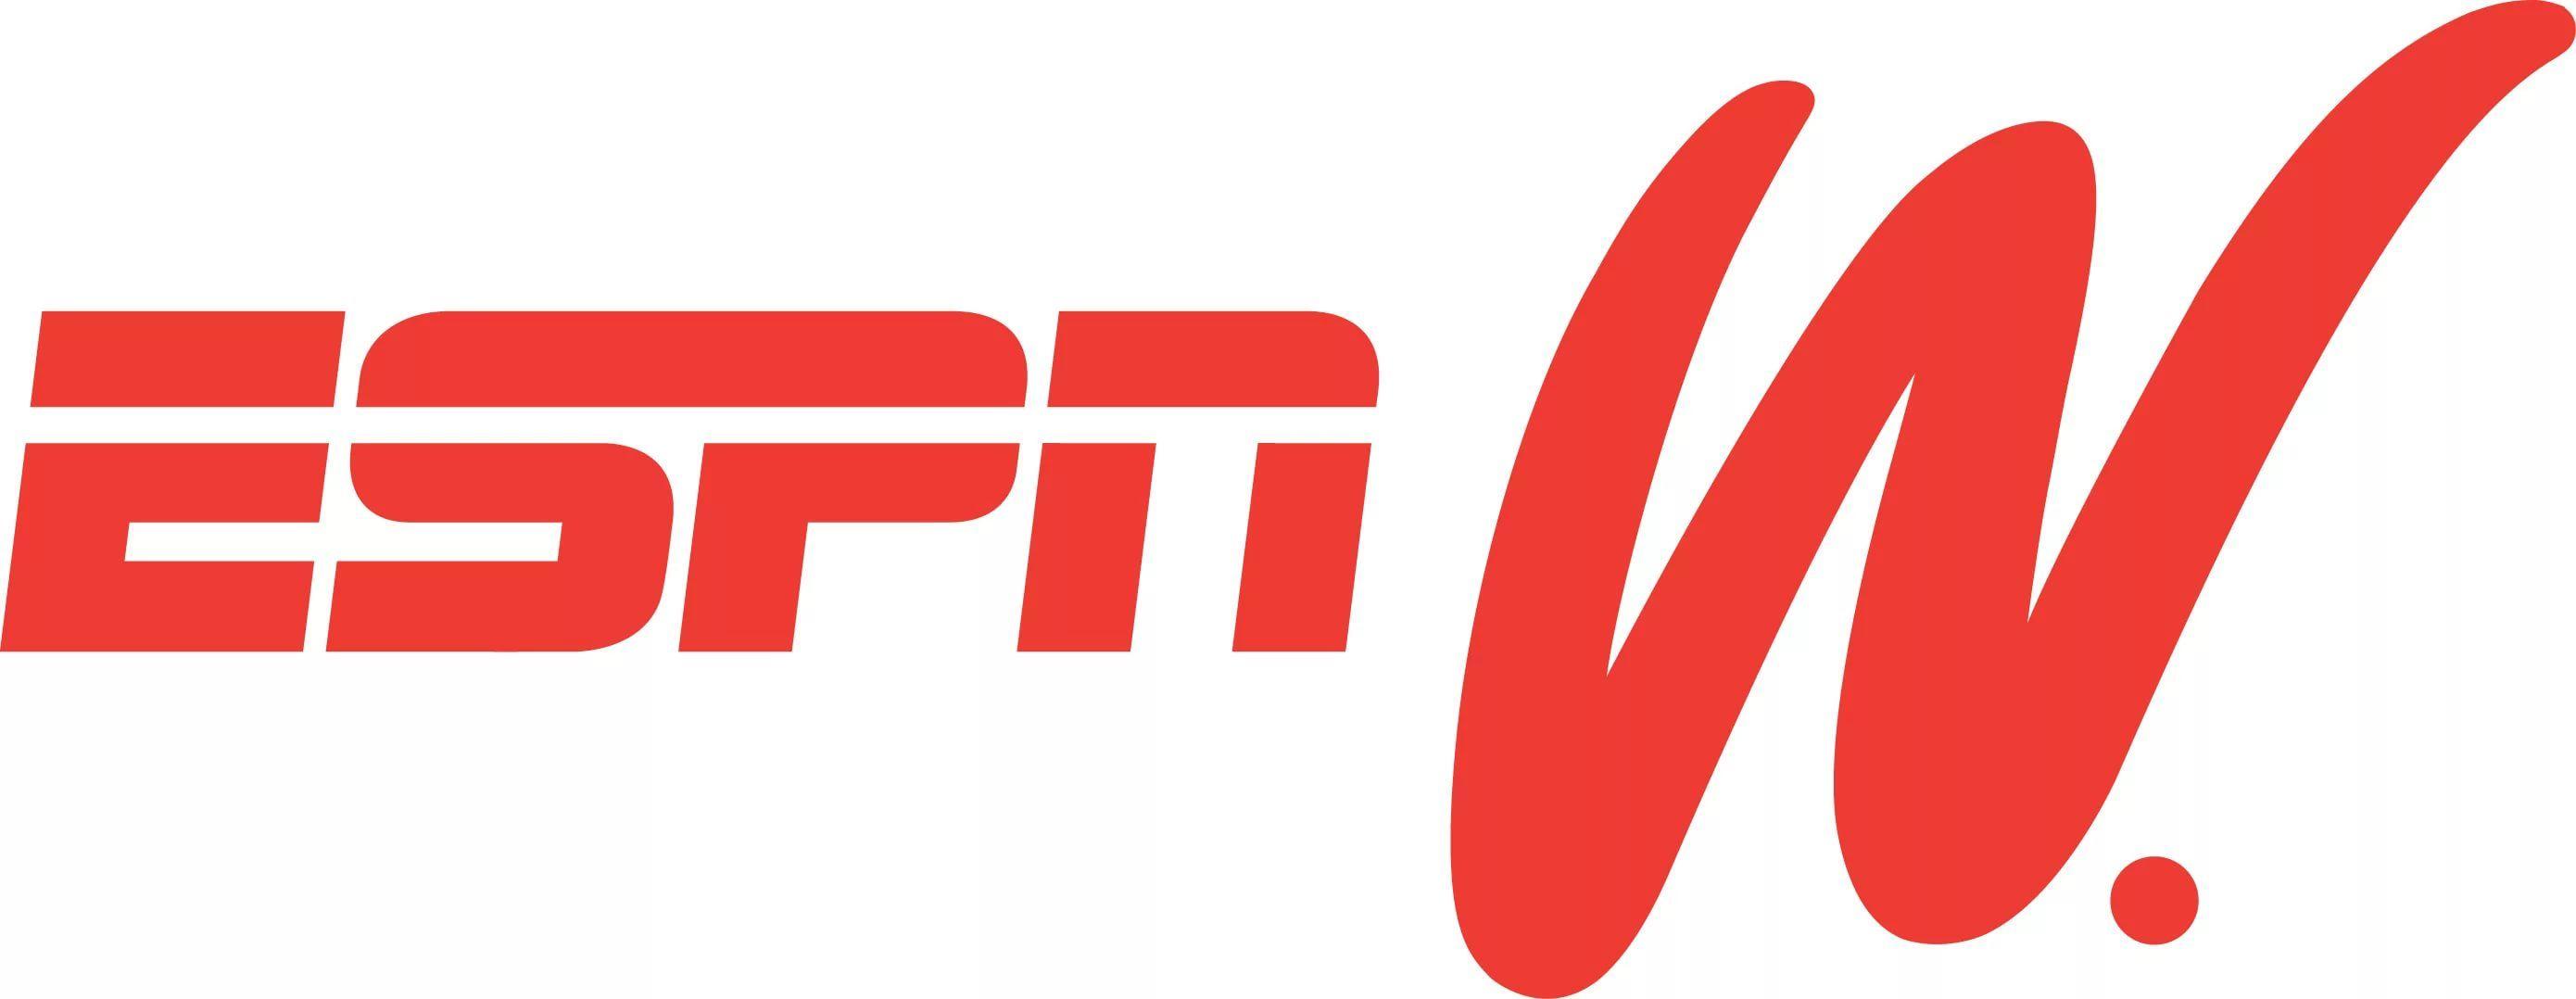 ESPN Wallpapers - Top Free ESPN Backgrounds - WallpaperAccess